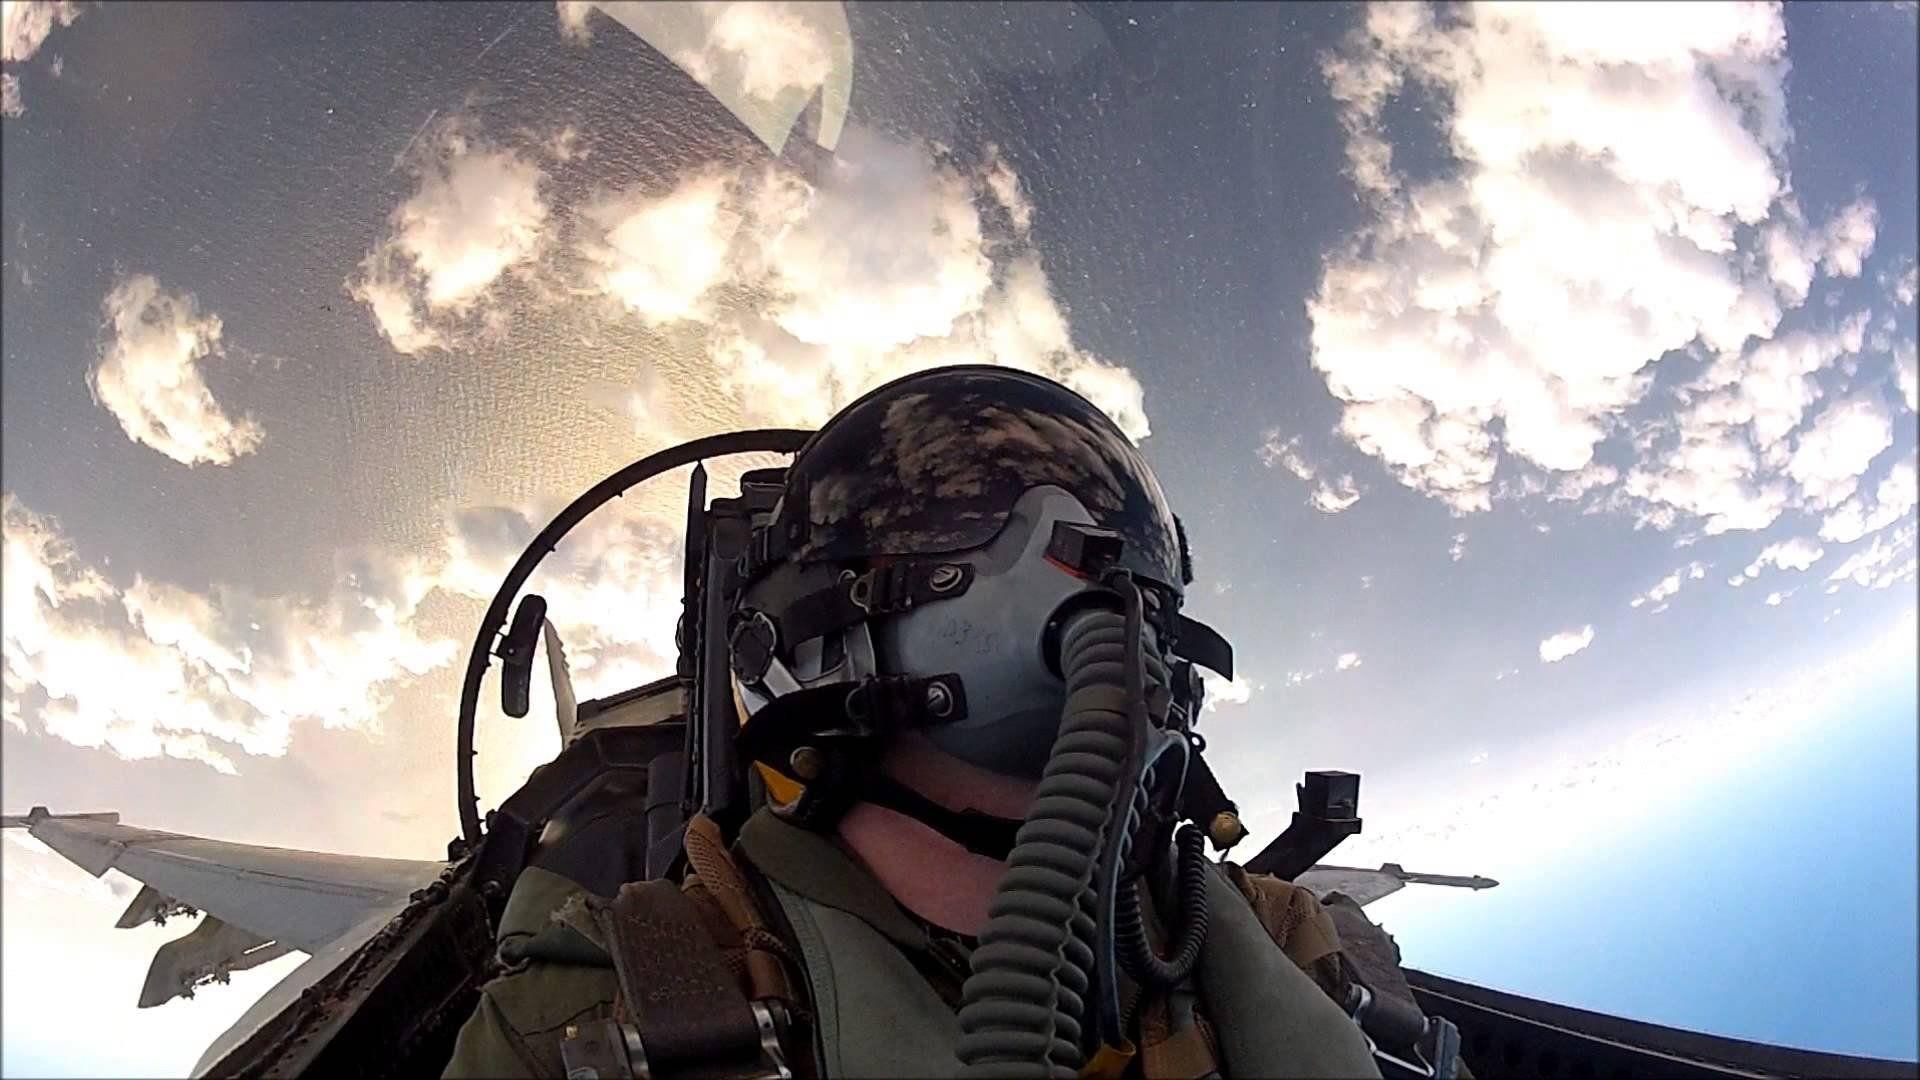 Extreme Selfie Fighter Pilot Snaps Epic Action Shot